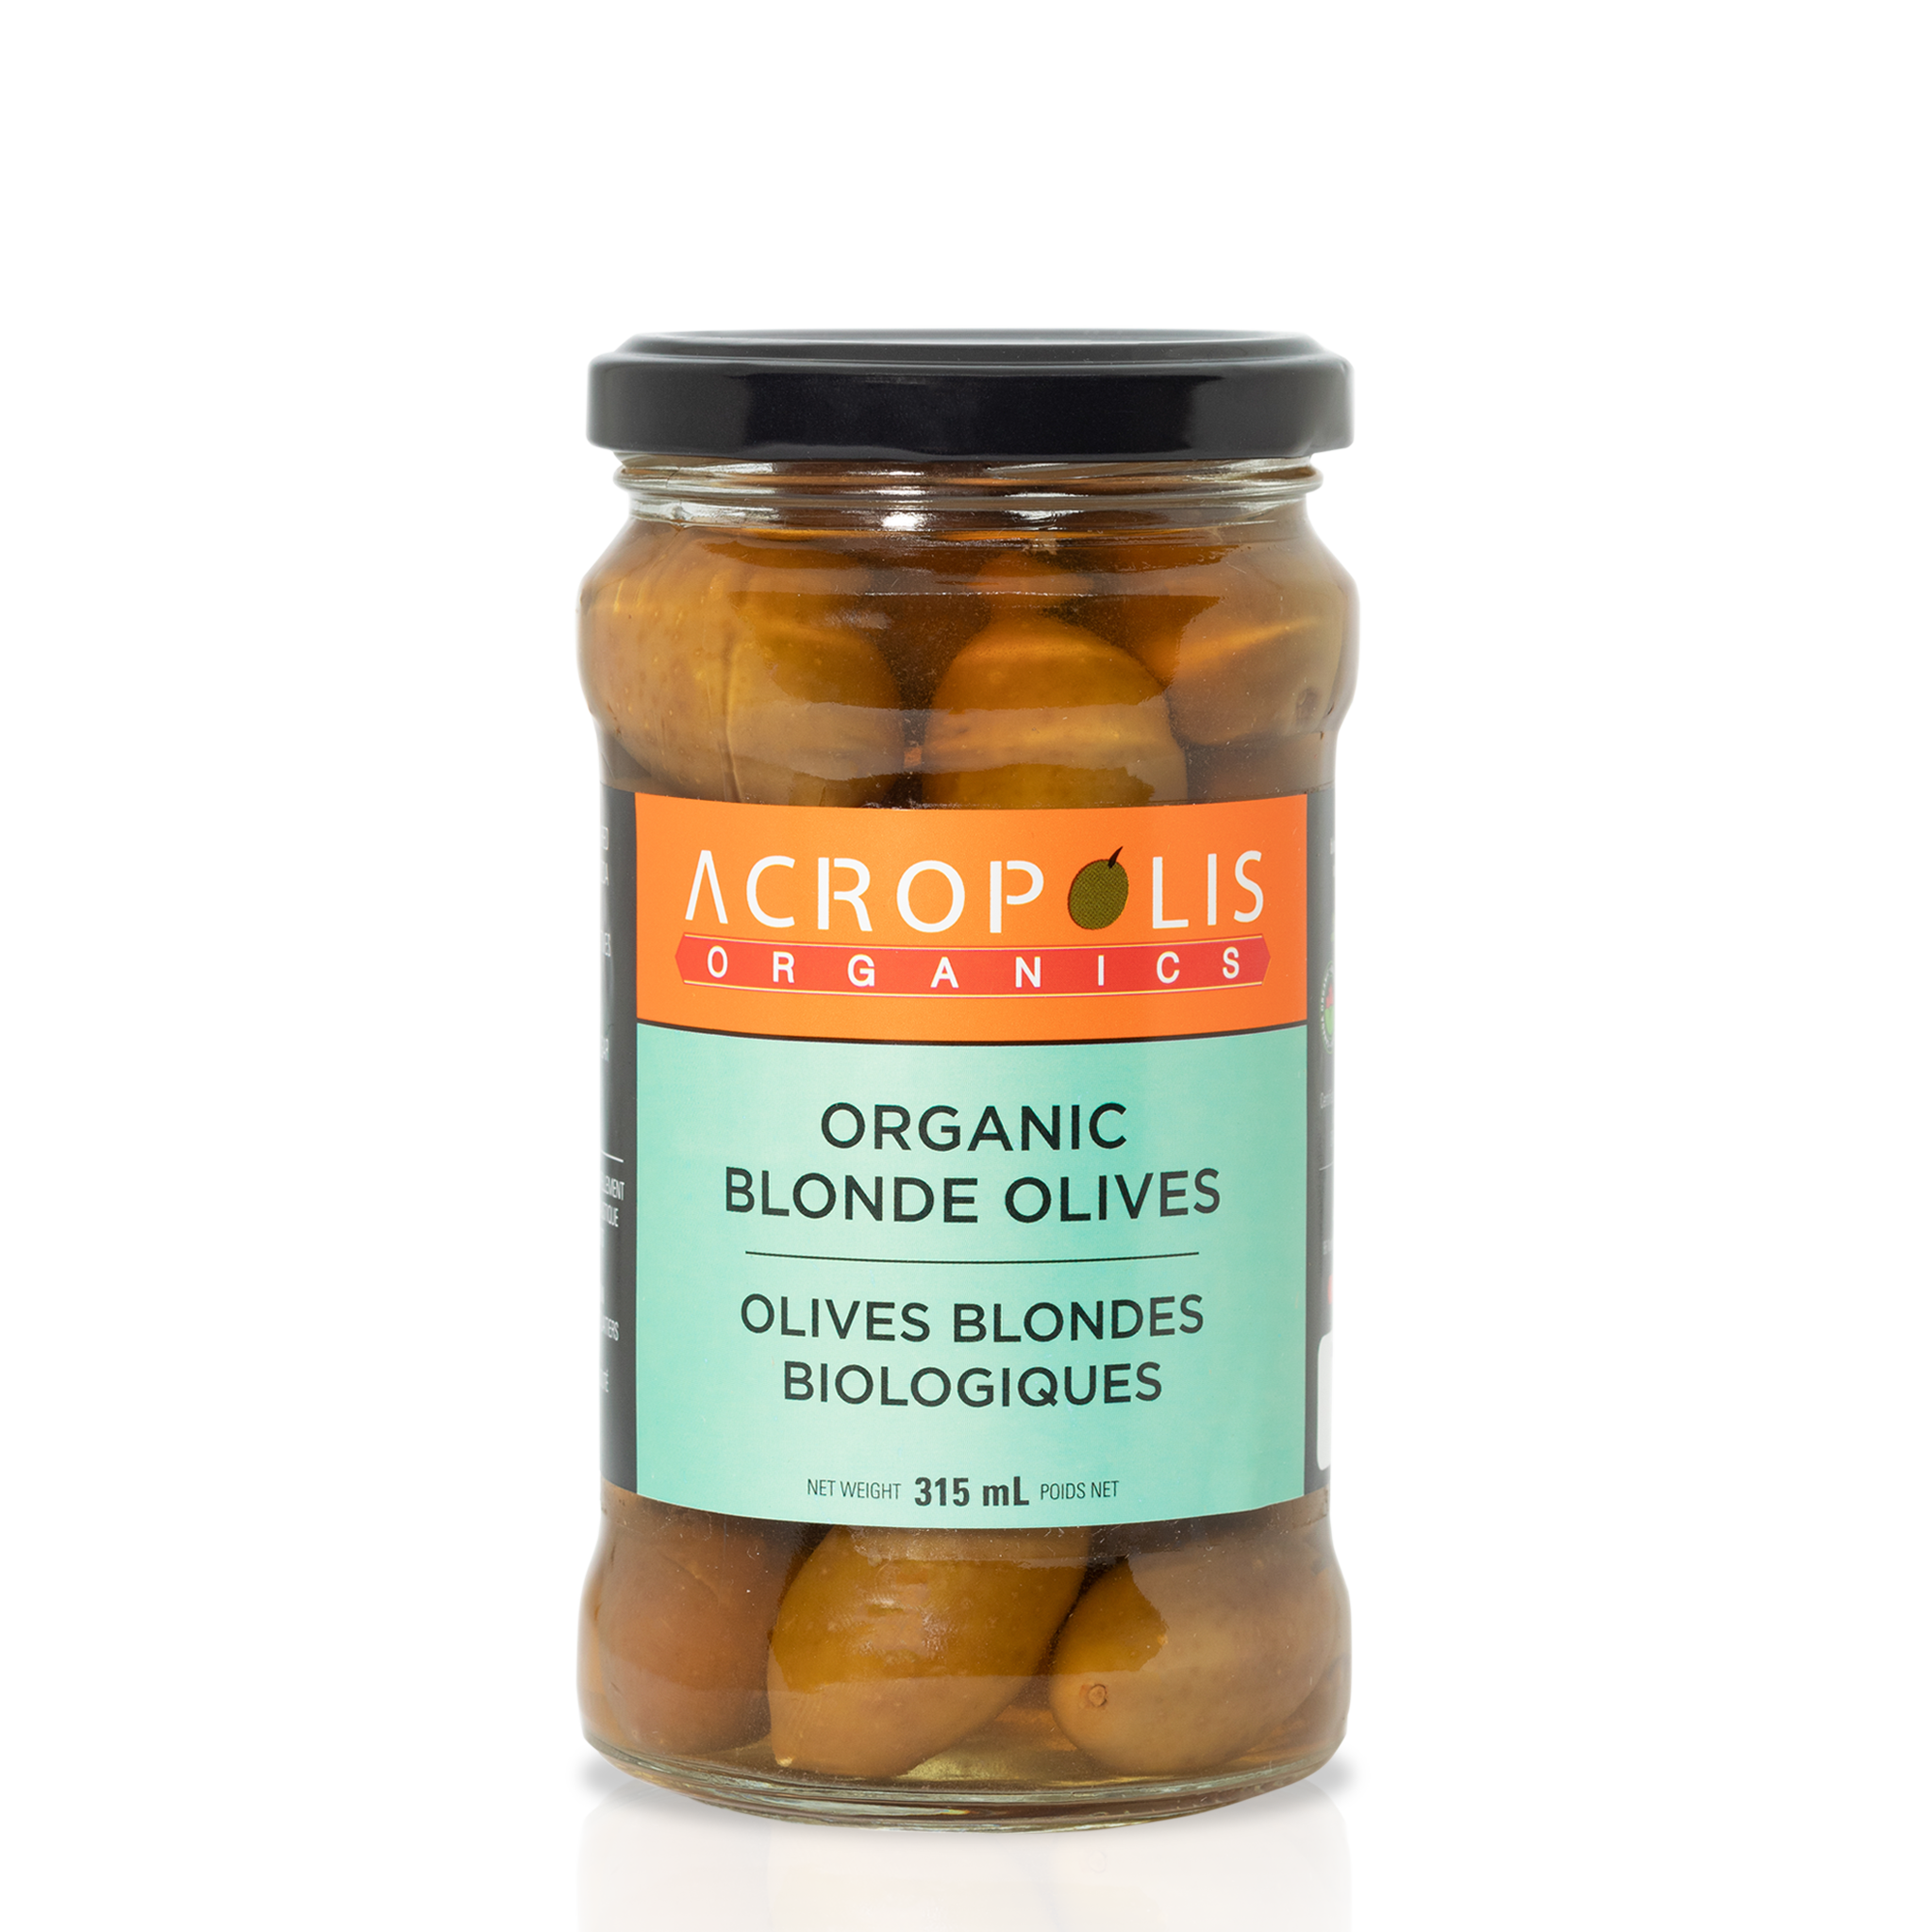 Acropolis Organics Blonde Olives 315ml